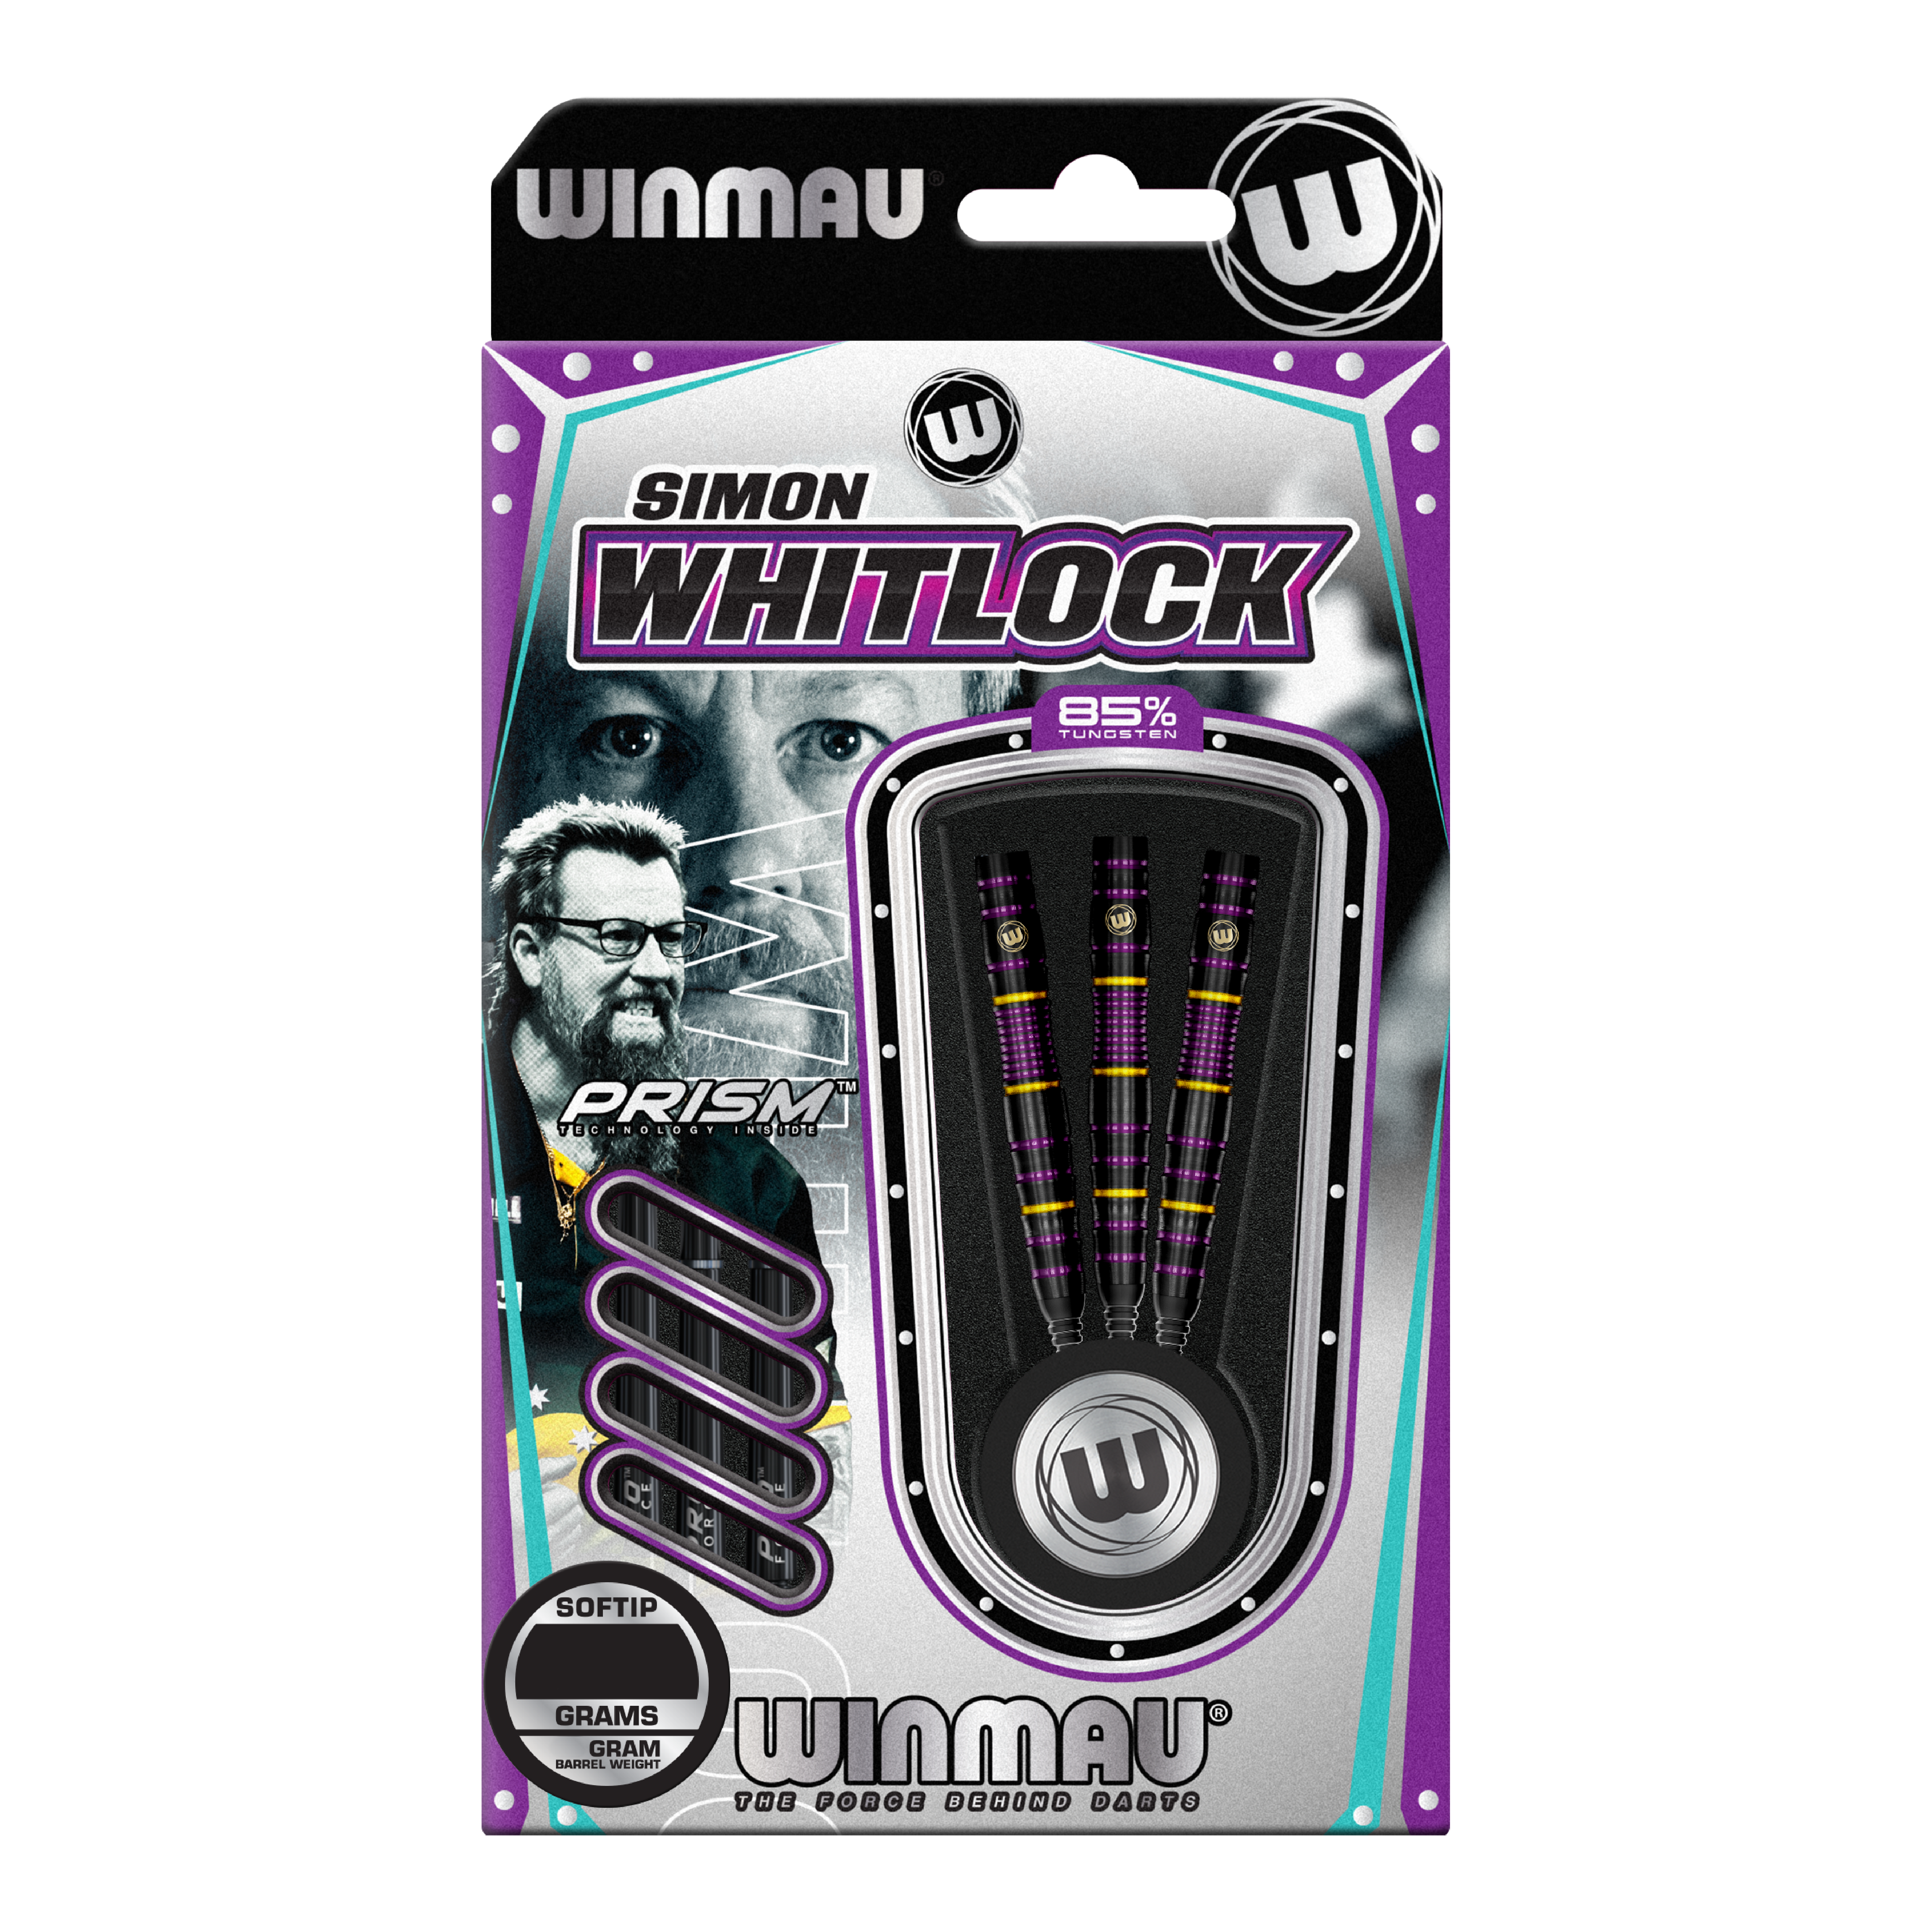 Miękkie rzutki Winmau Simon Whitlock 85 Pro-Series - 20g